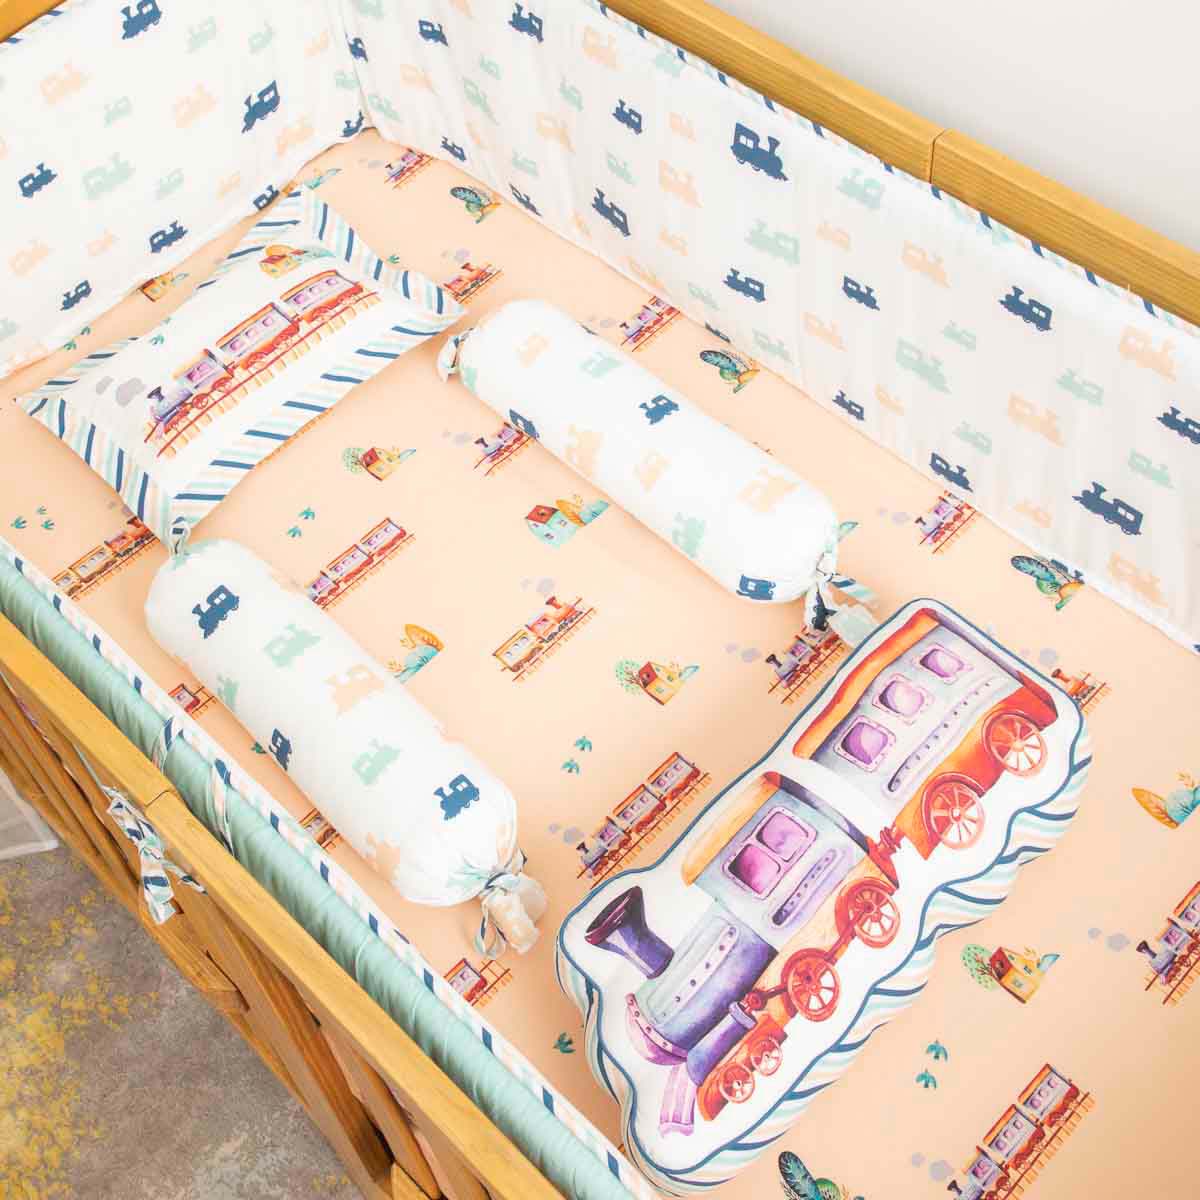 Cot Bedding Set with Quilt Bundle